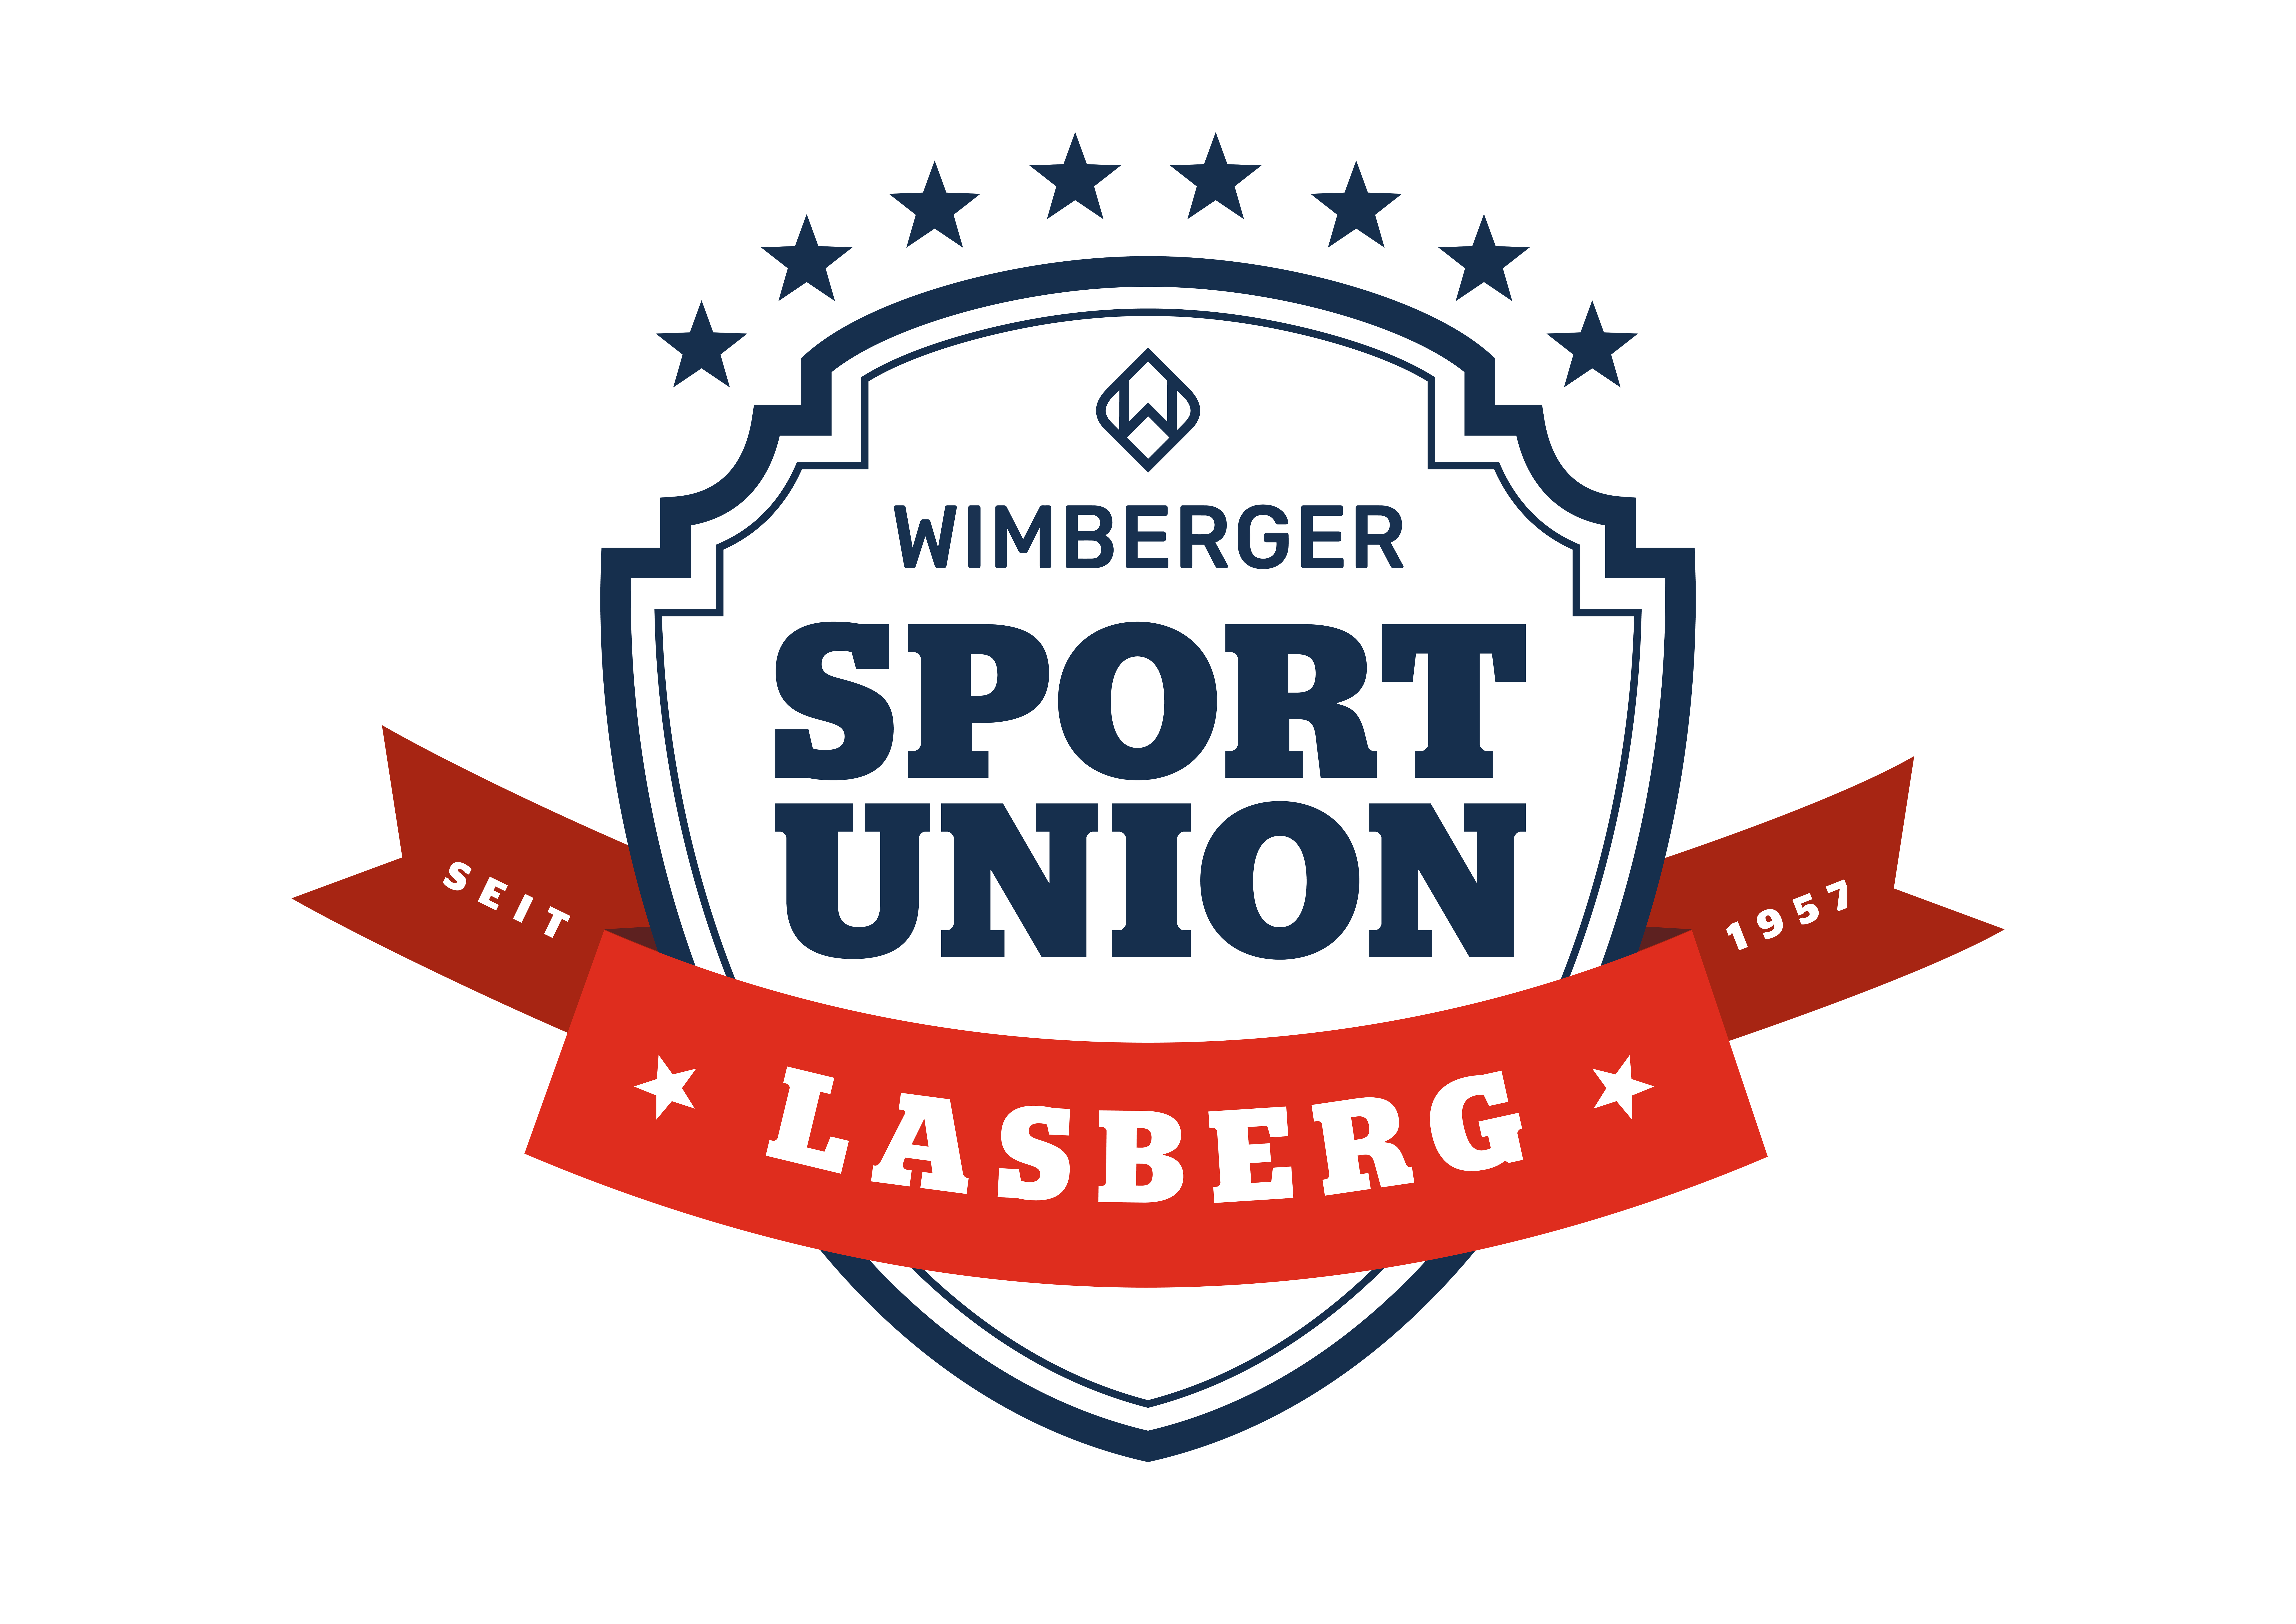 WIMBERGER Sportunion Lasberg